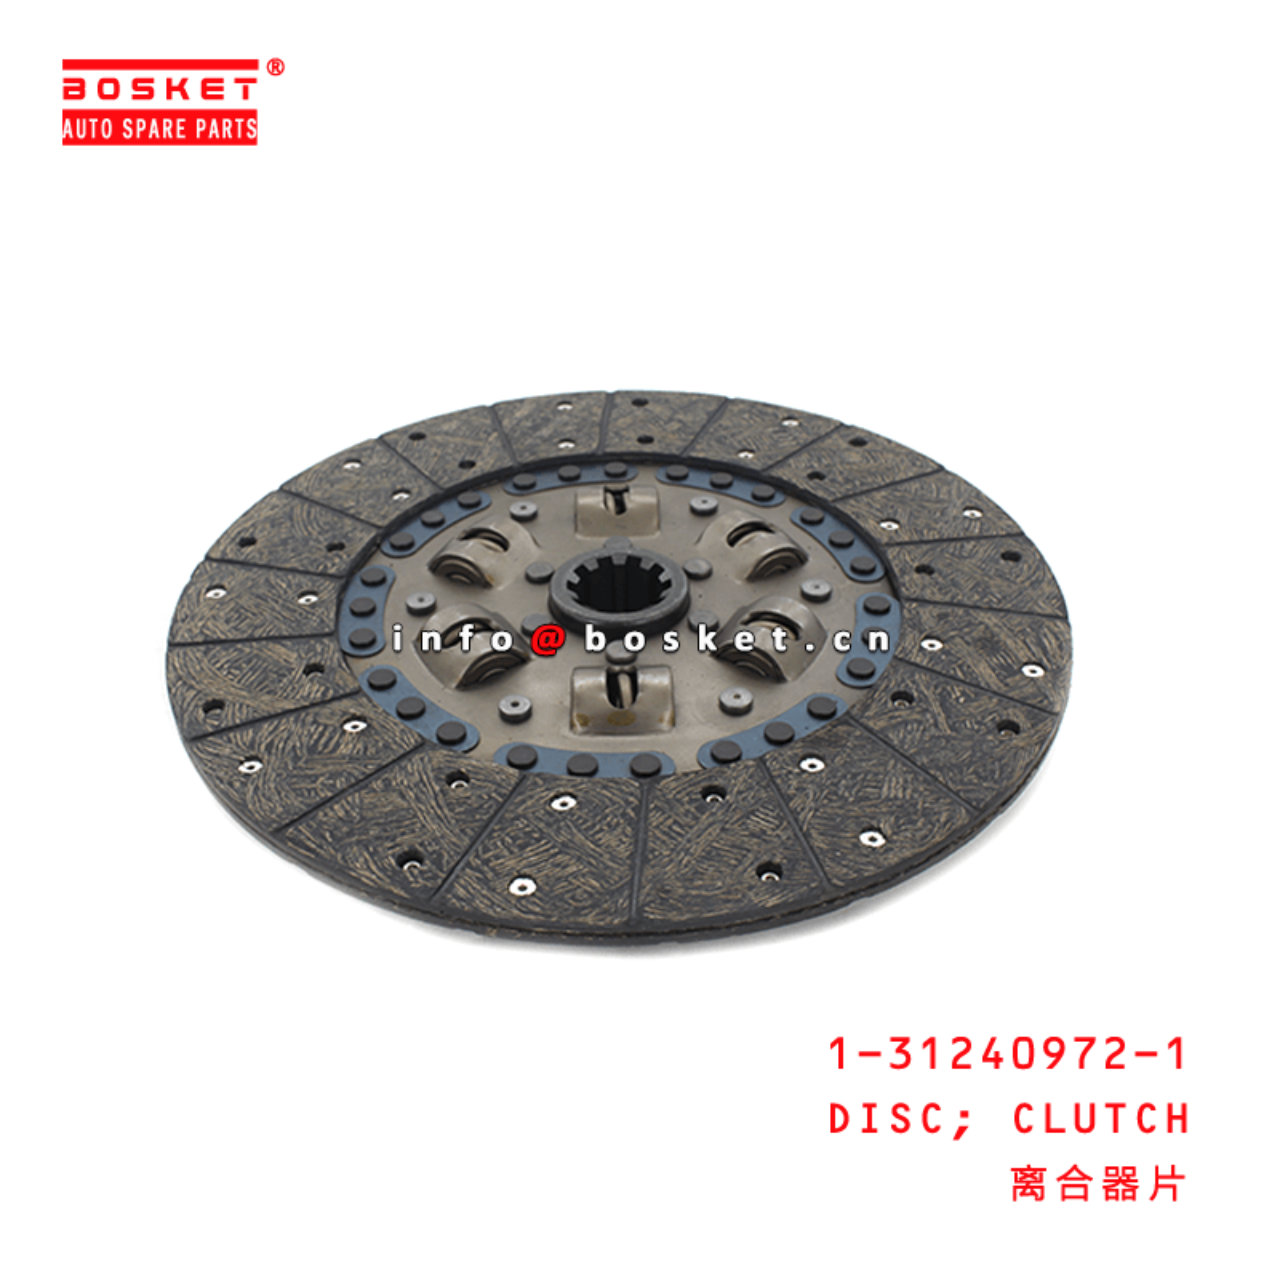 1-31240972-1 Clutch Disc 1312409721 Suitable for ISUZU FVM - OEM 